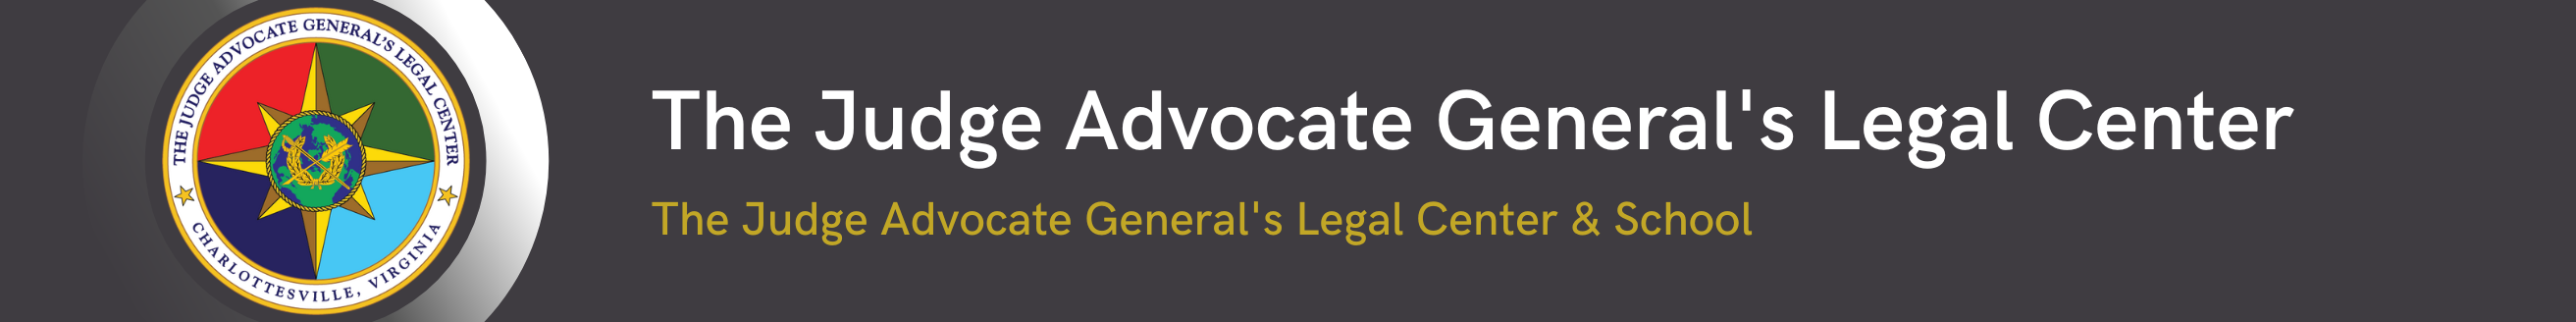 Legal Center Banner